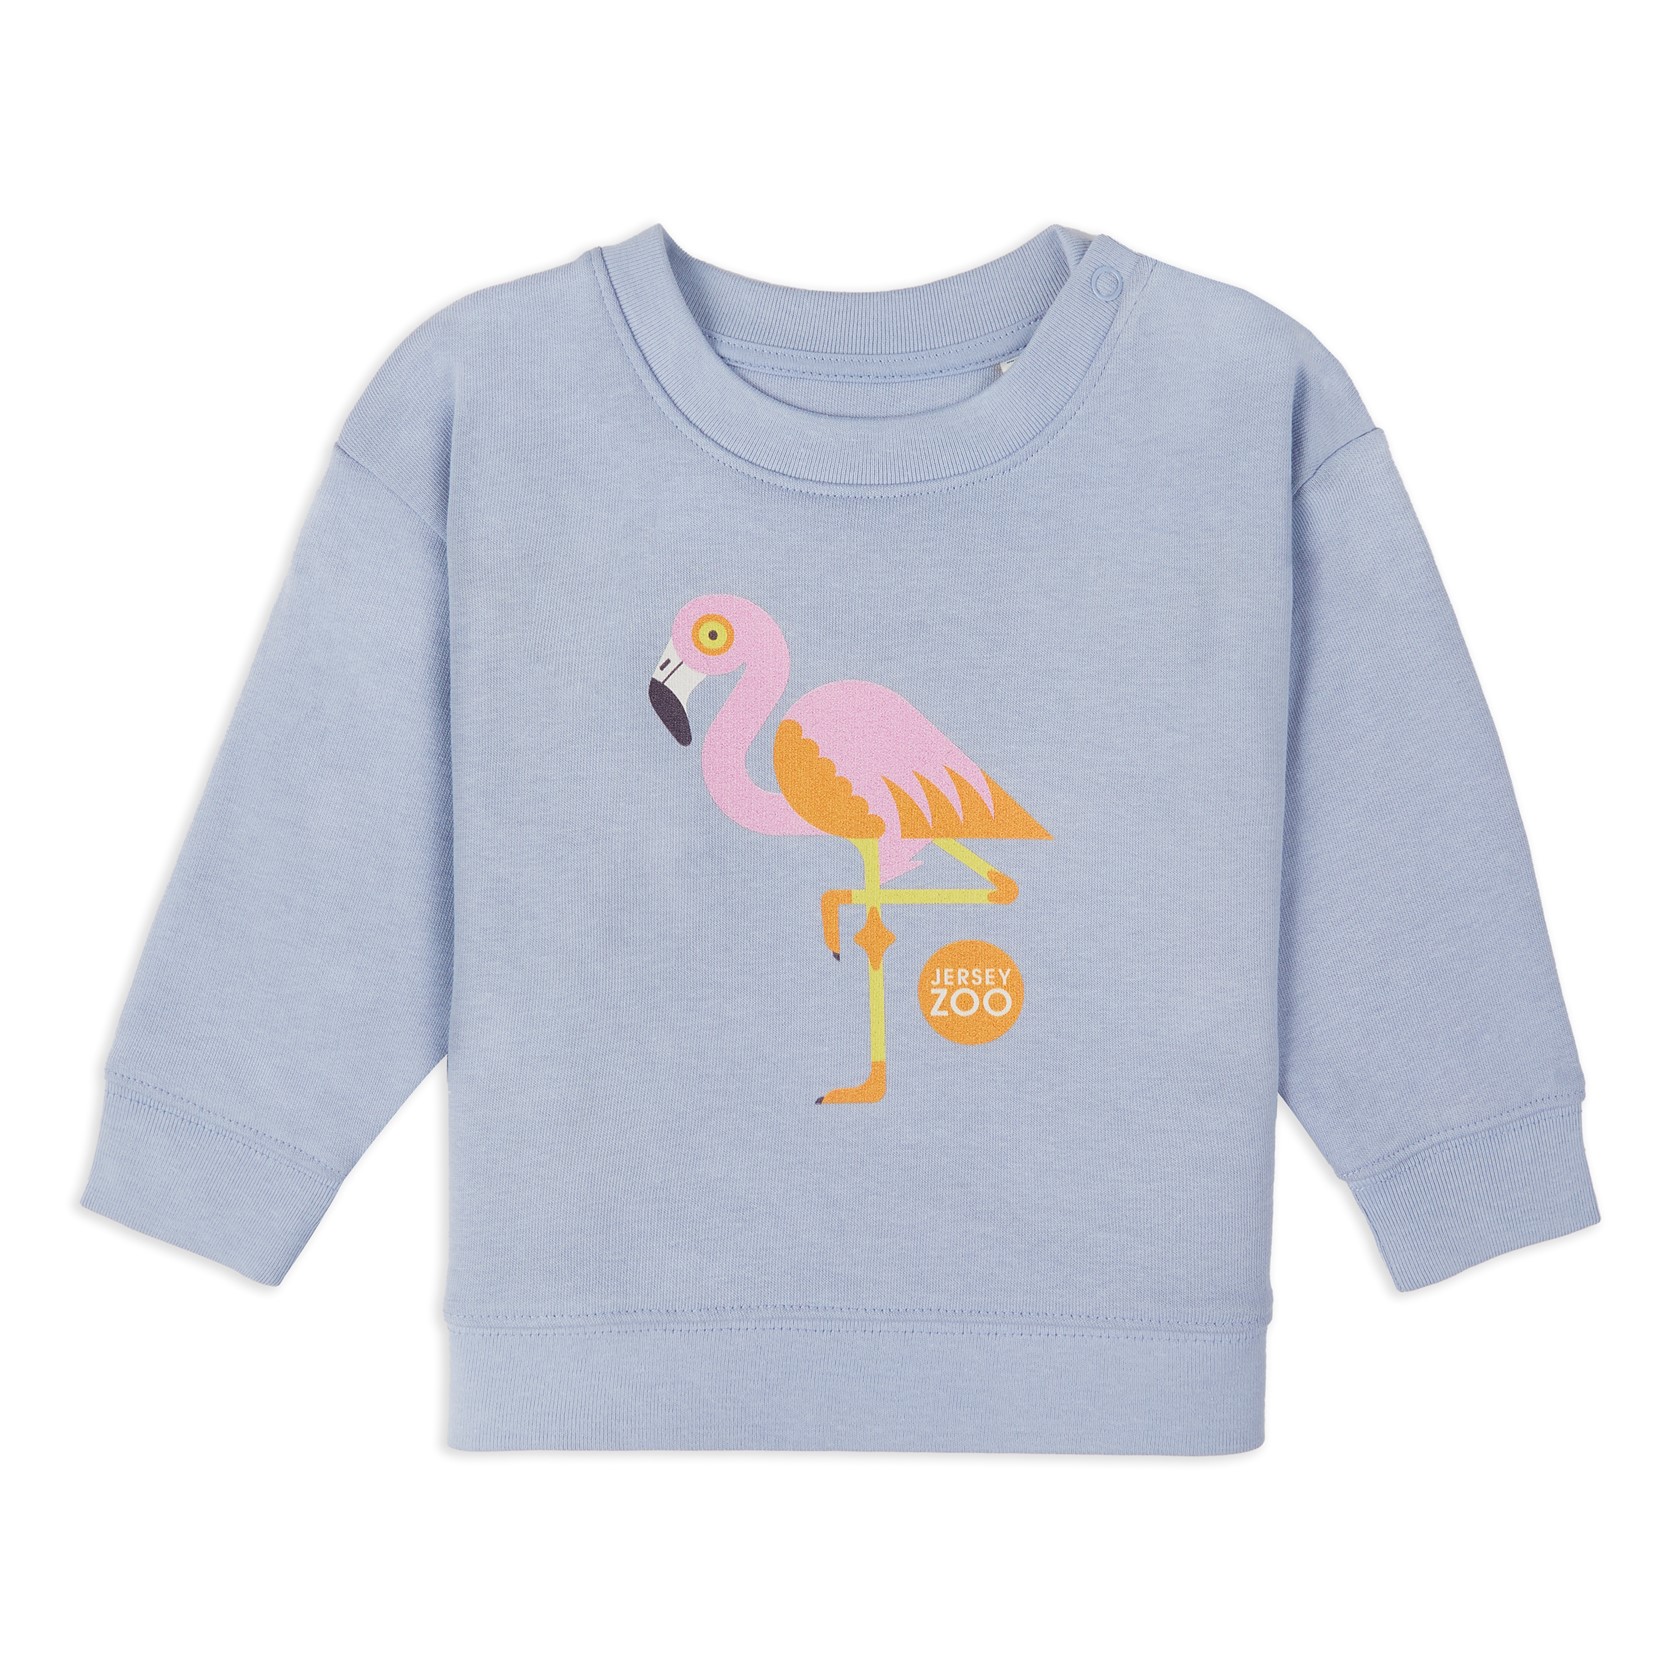 Jersey Zoo Baby Flamingo Sweater